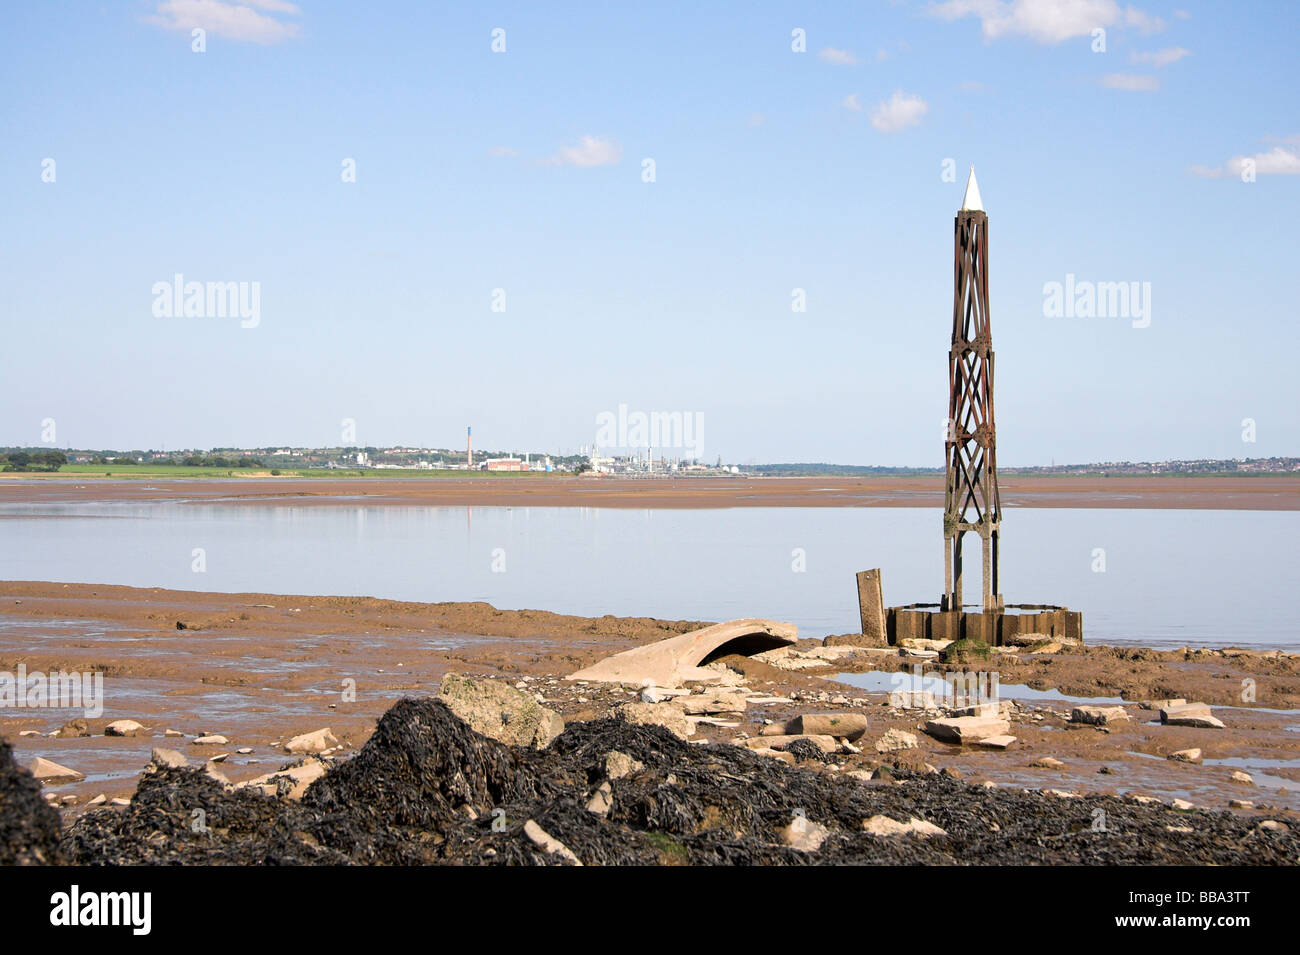 View across the River Mersey Estuary, near Hale, Merseyside, UK Stock Photo